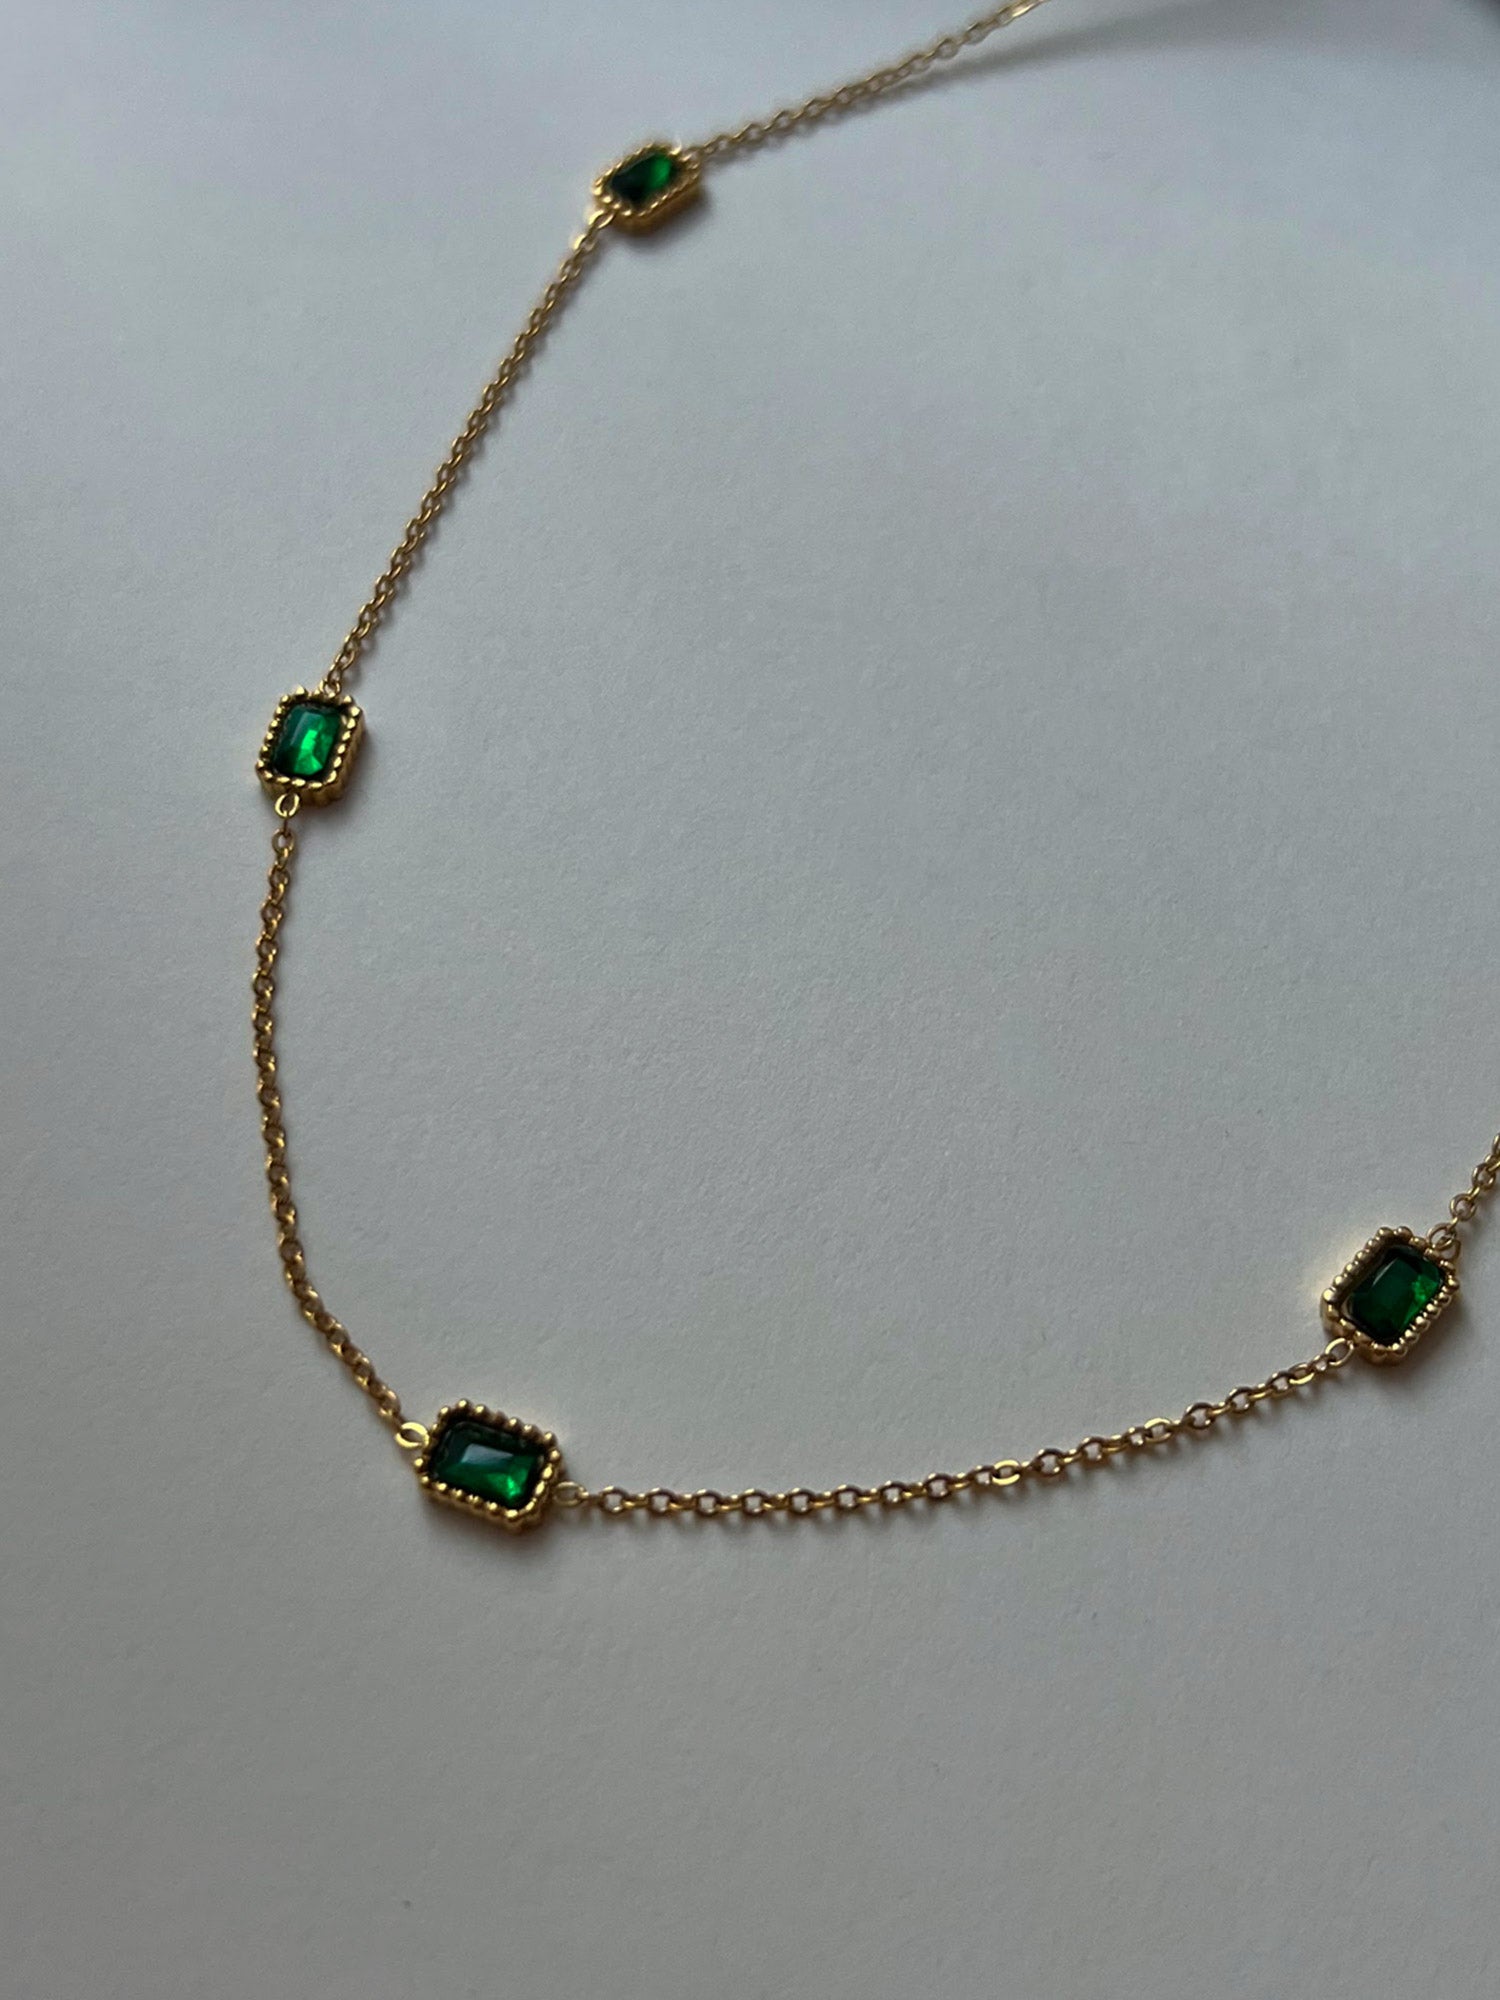 Vintage Multi-Gemstone Necklace - Emerald Green